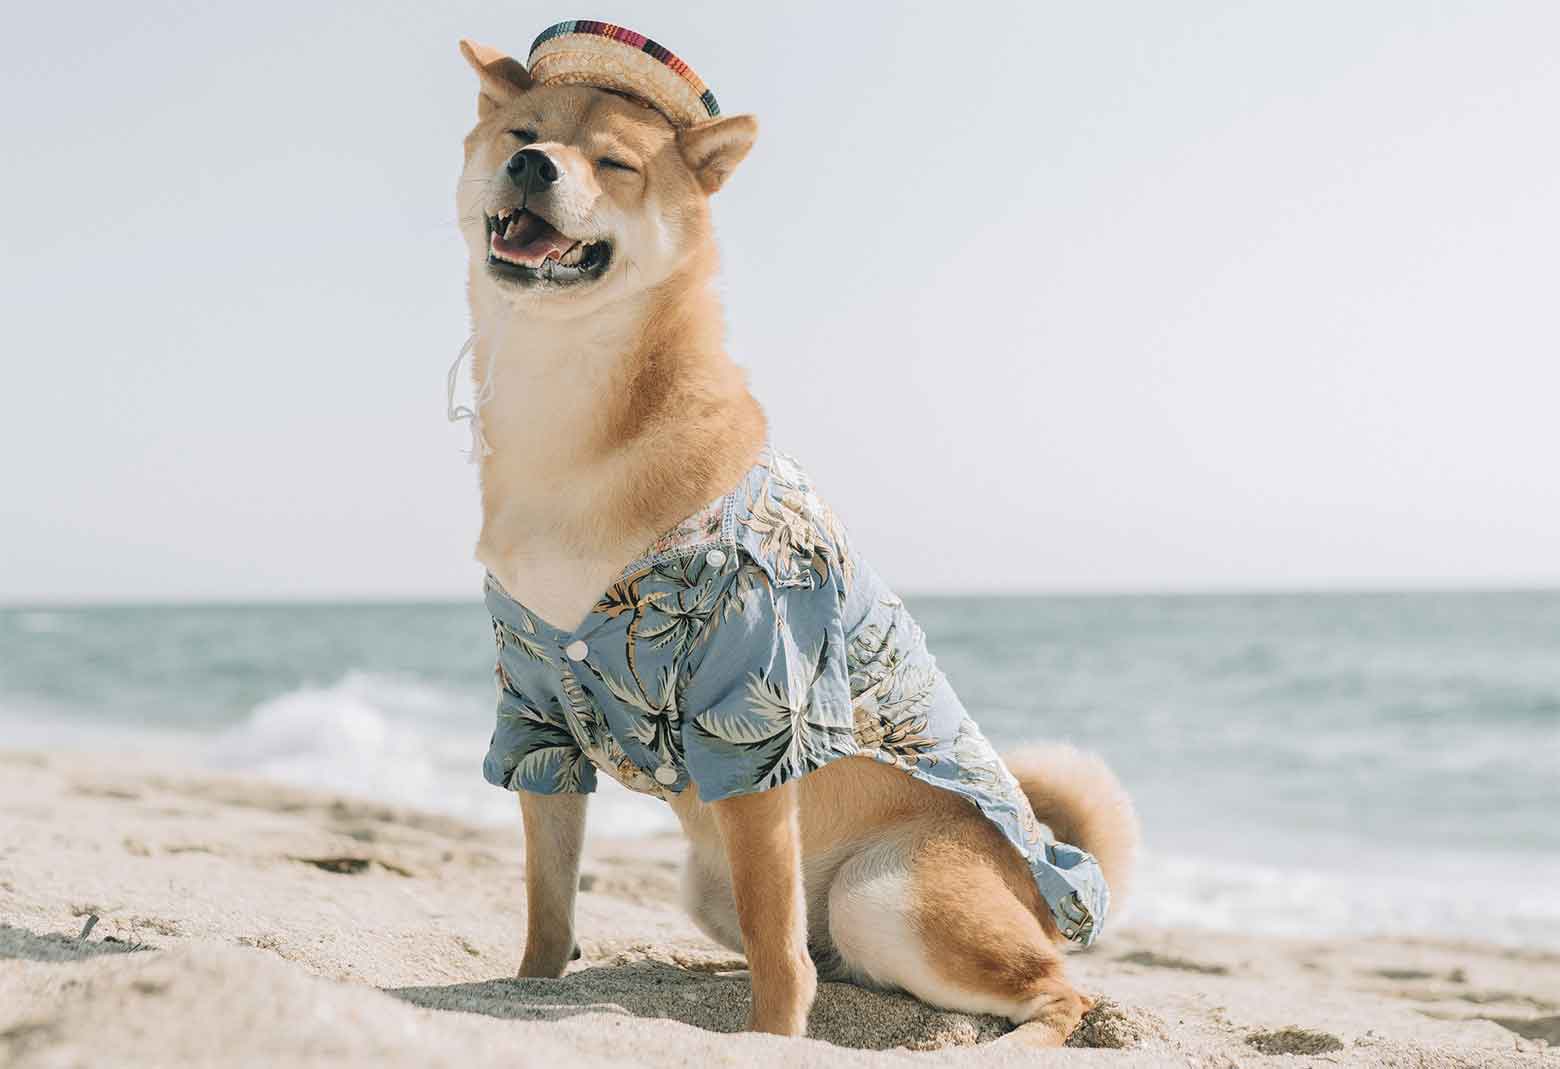 Dog On Beach Wearing Beach Clothes